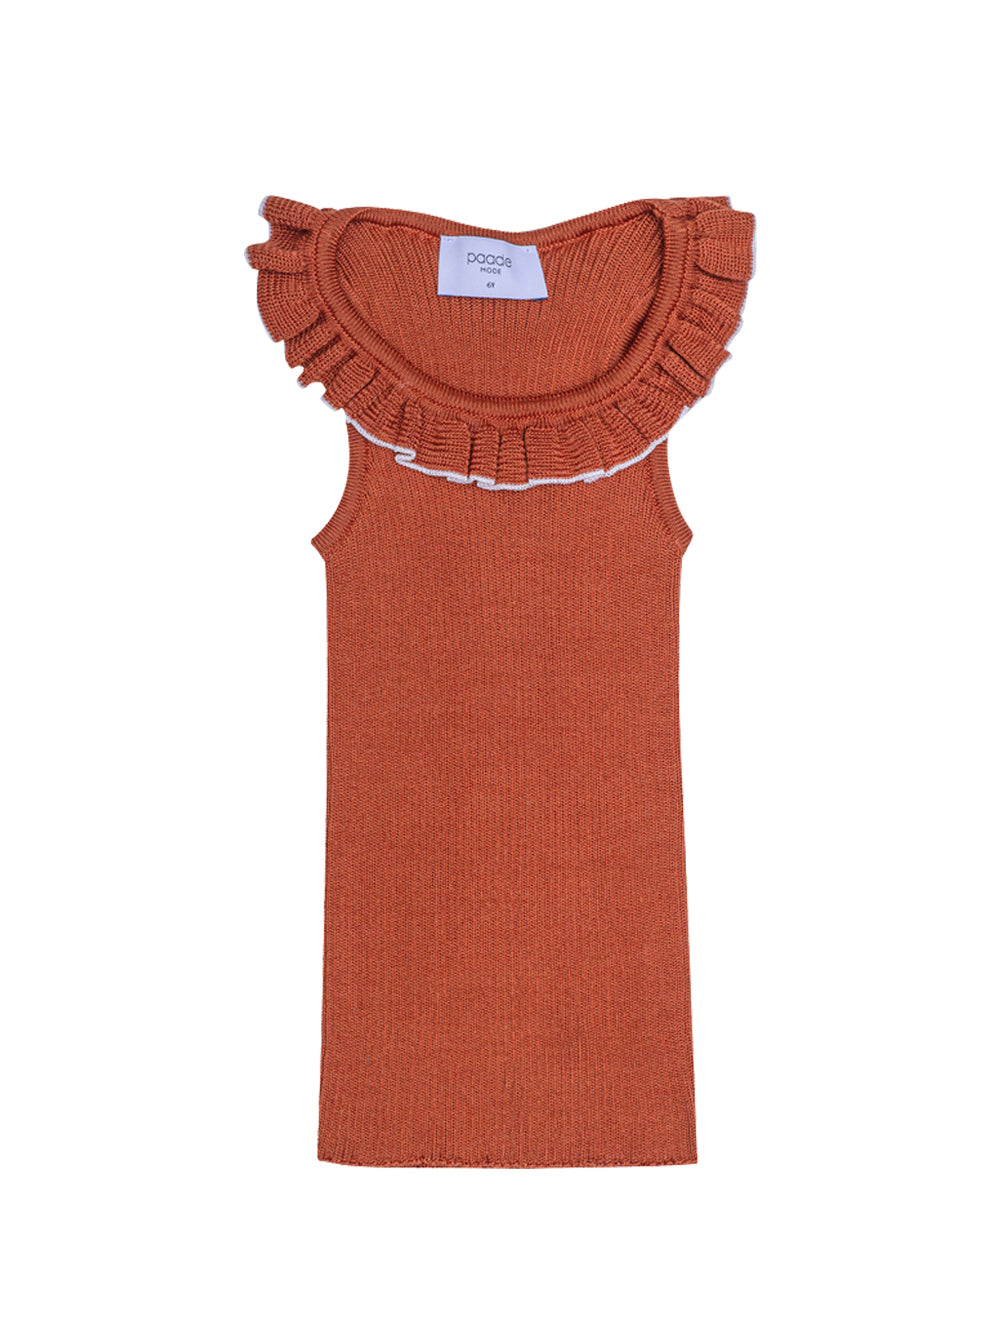 Orange Seamless Knit Top